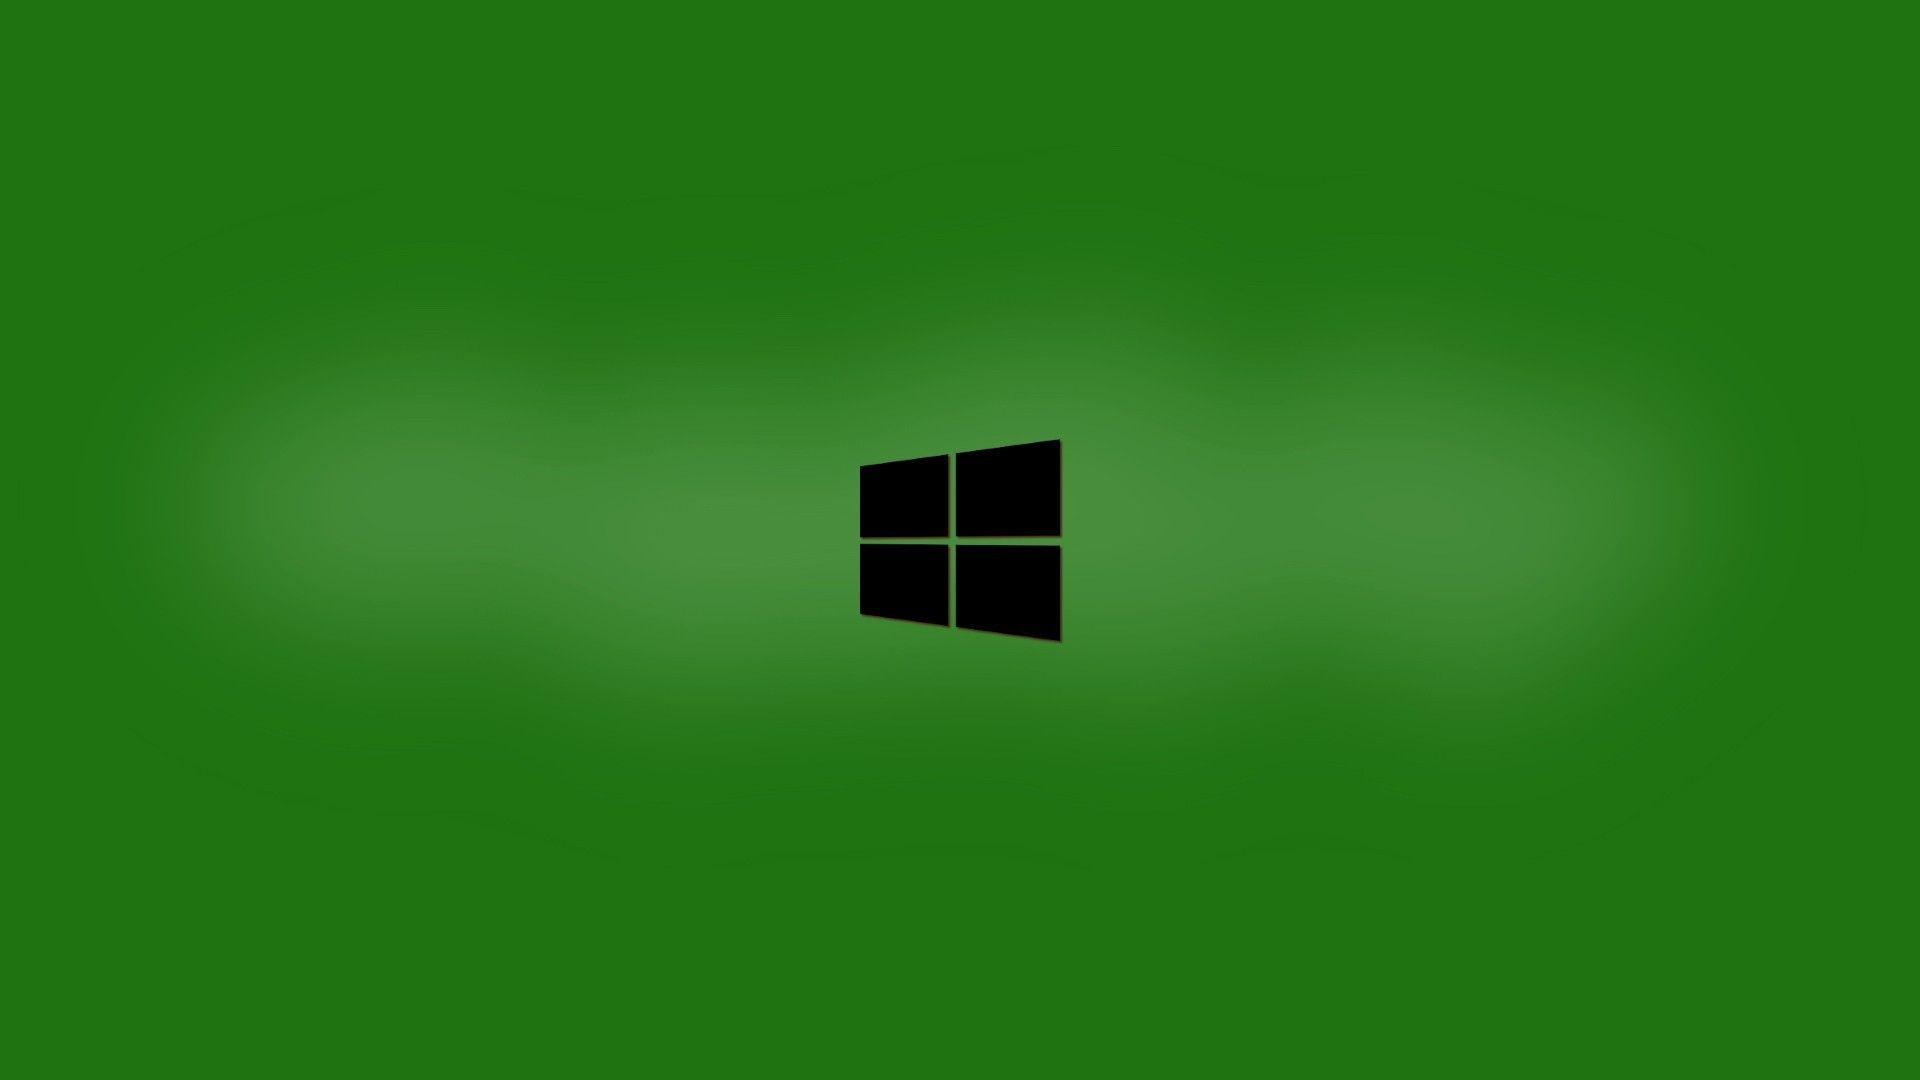 Dark Green Windows Wallpapers - Top Free Dark Green Windows Backgrounds ...